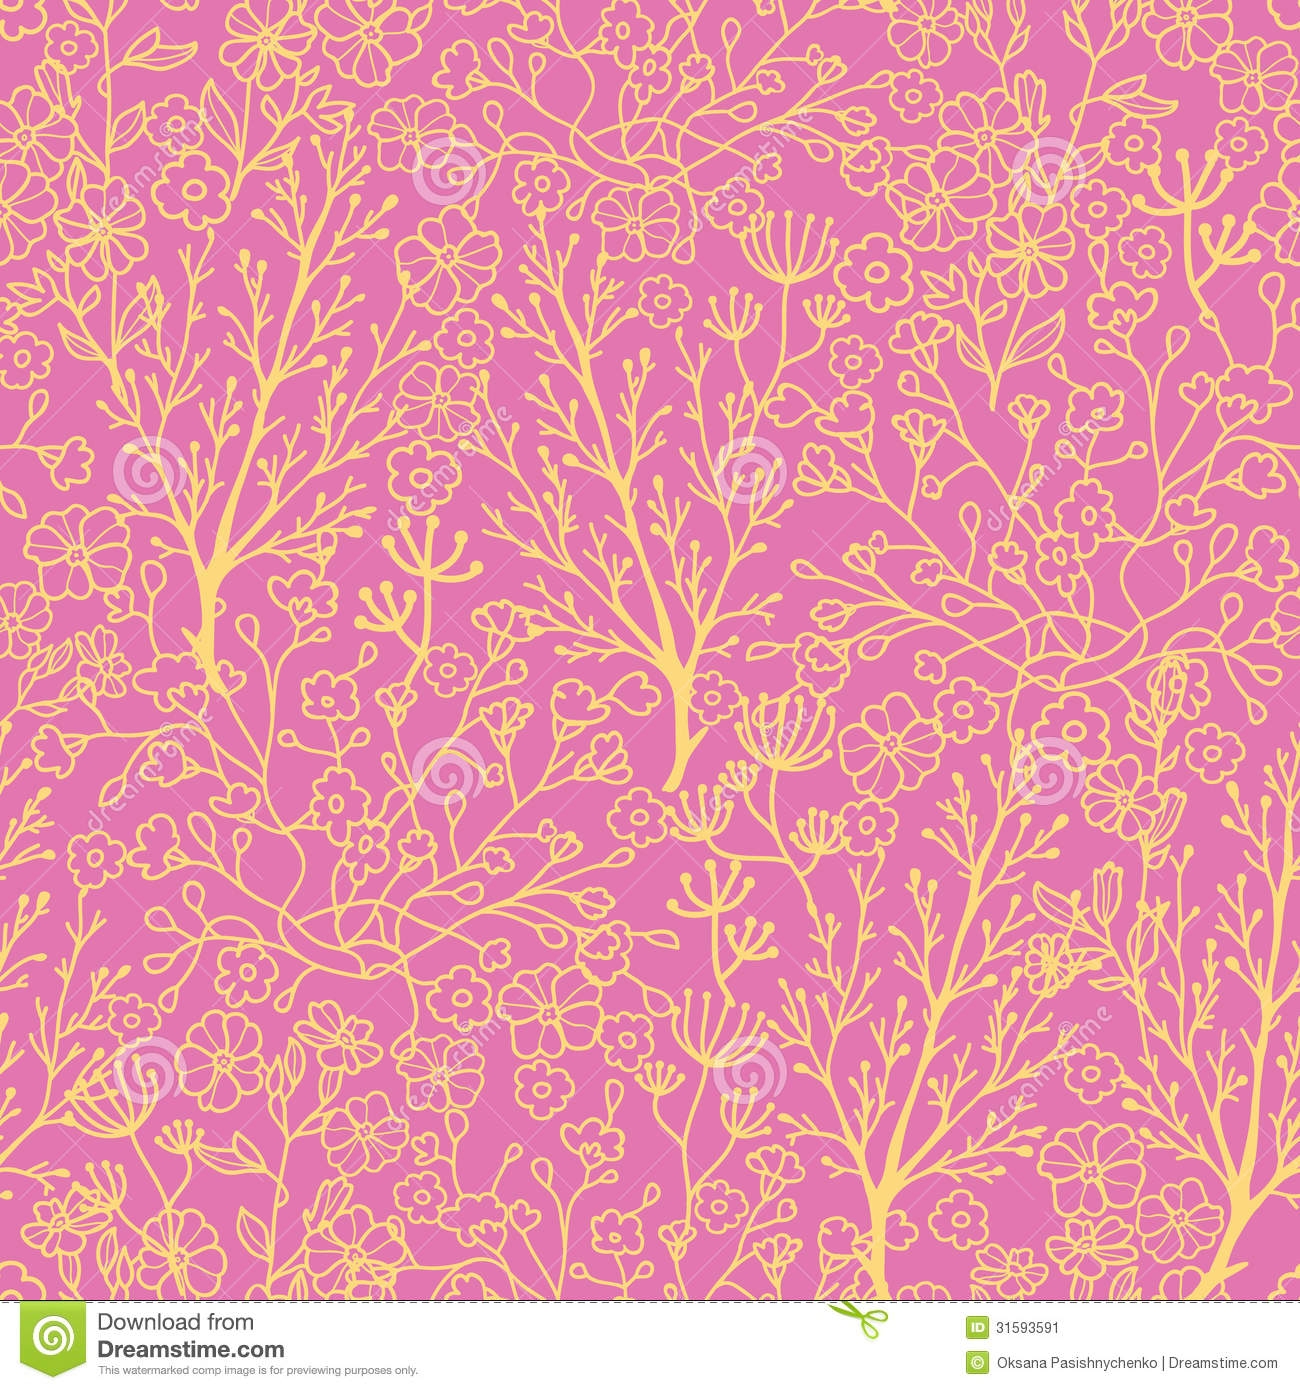 Pink And Gold Wallpaper Desktop Background